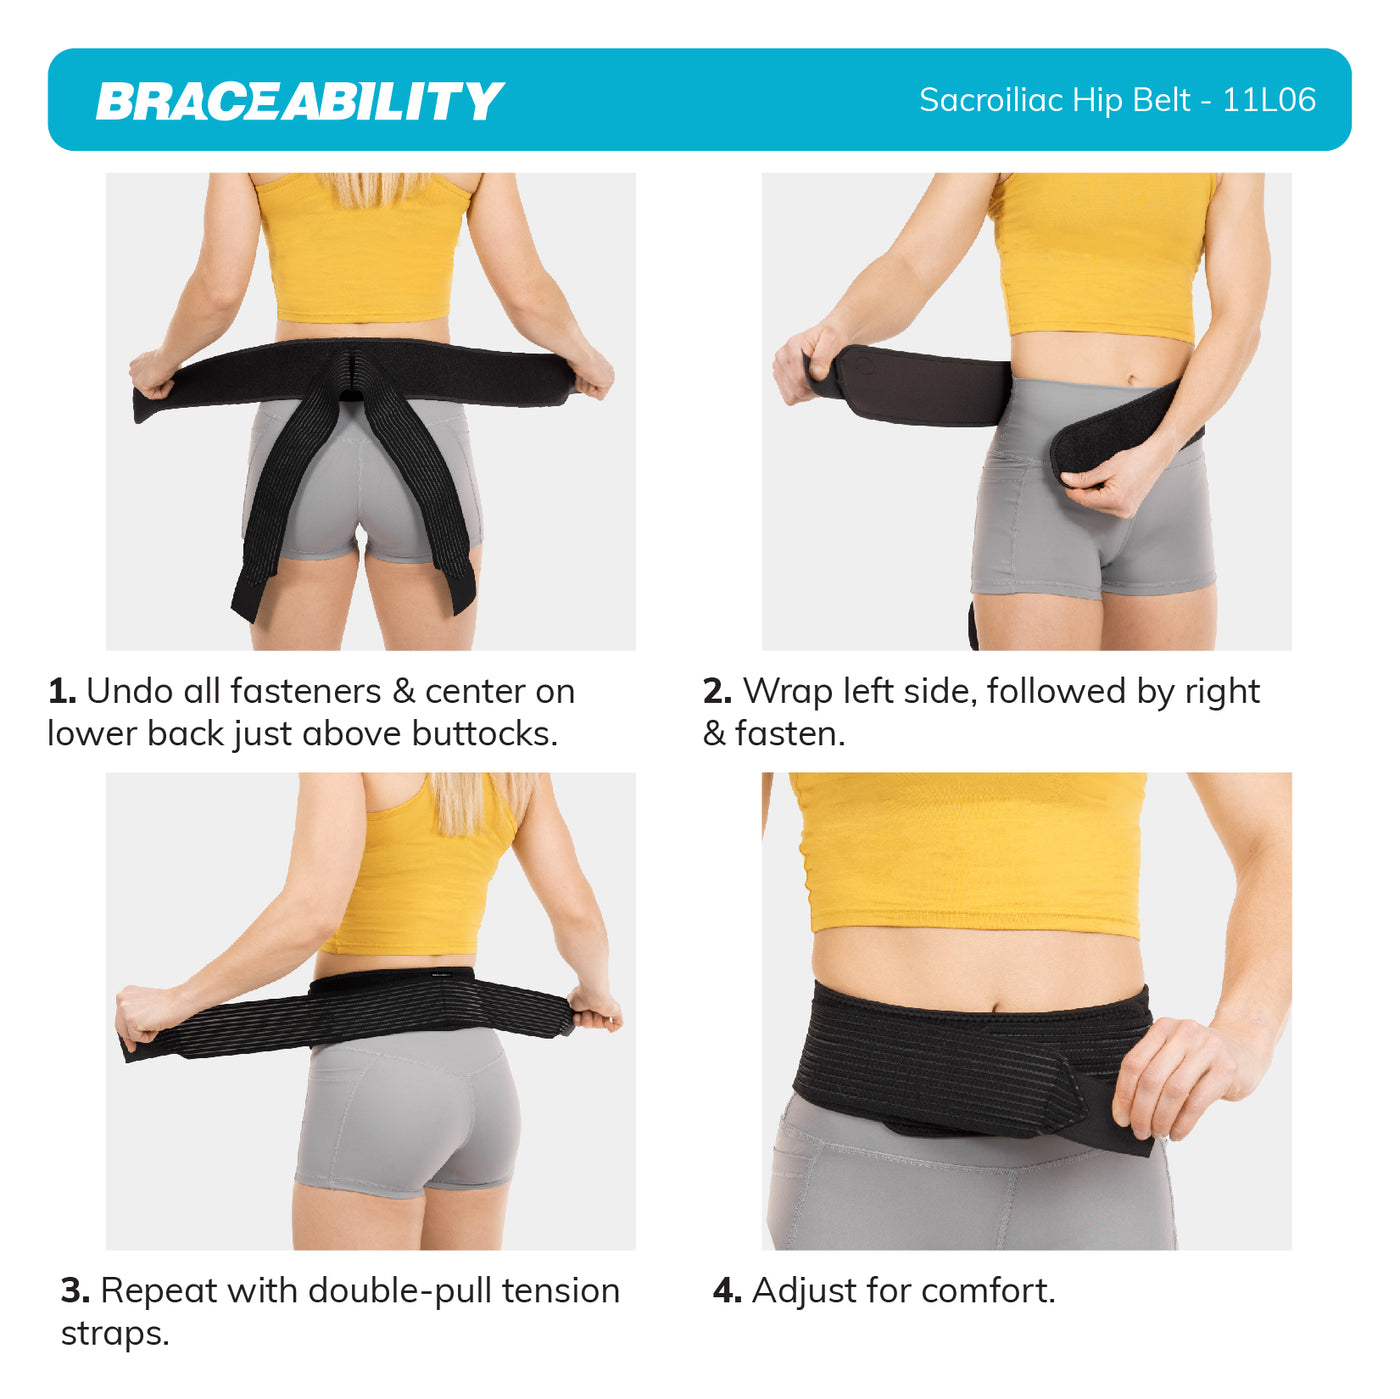 instruction sheet for the pelvic tilt brace is a simple wrap-around application